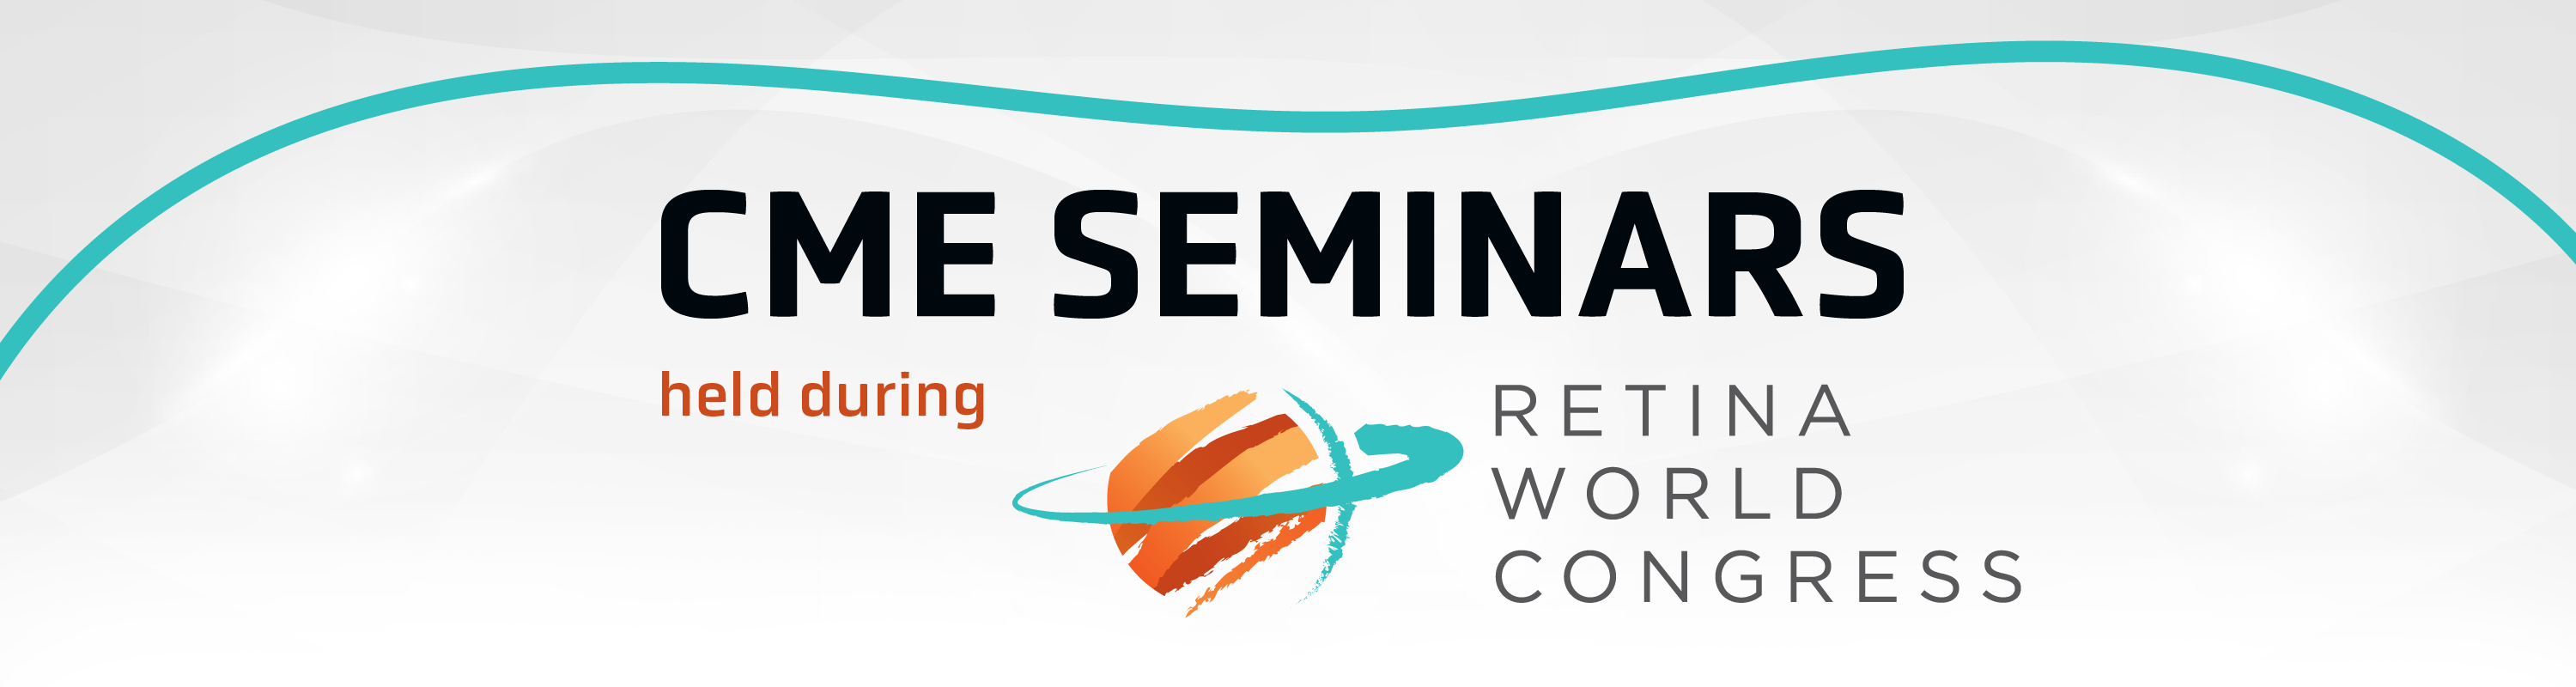 CME Seminars Held During Retina World Congress